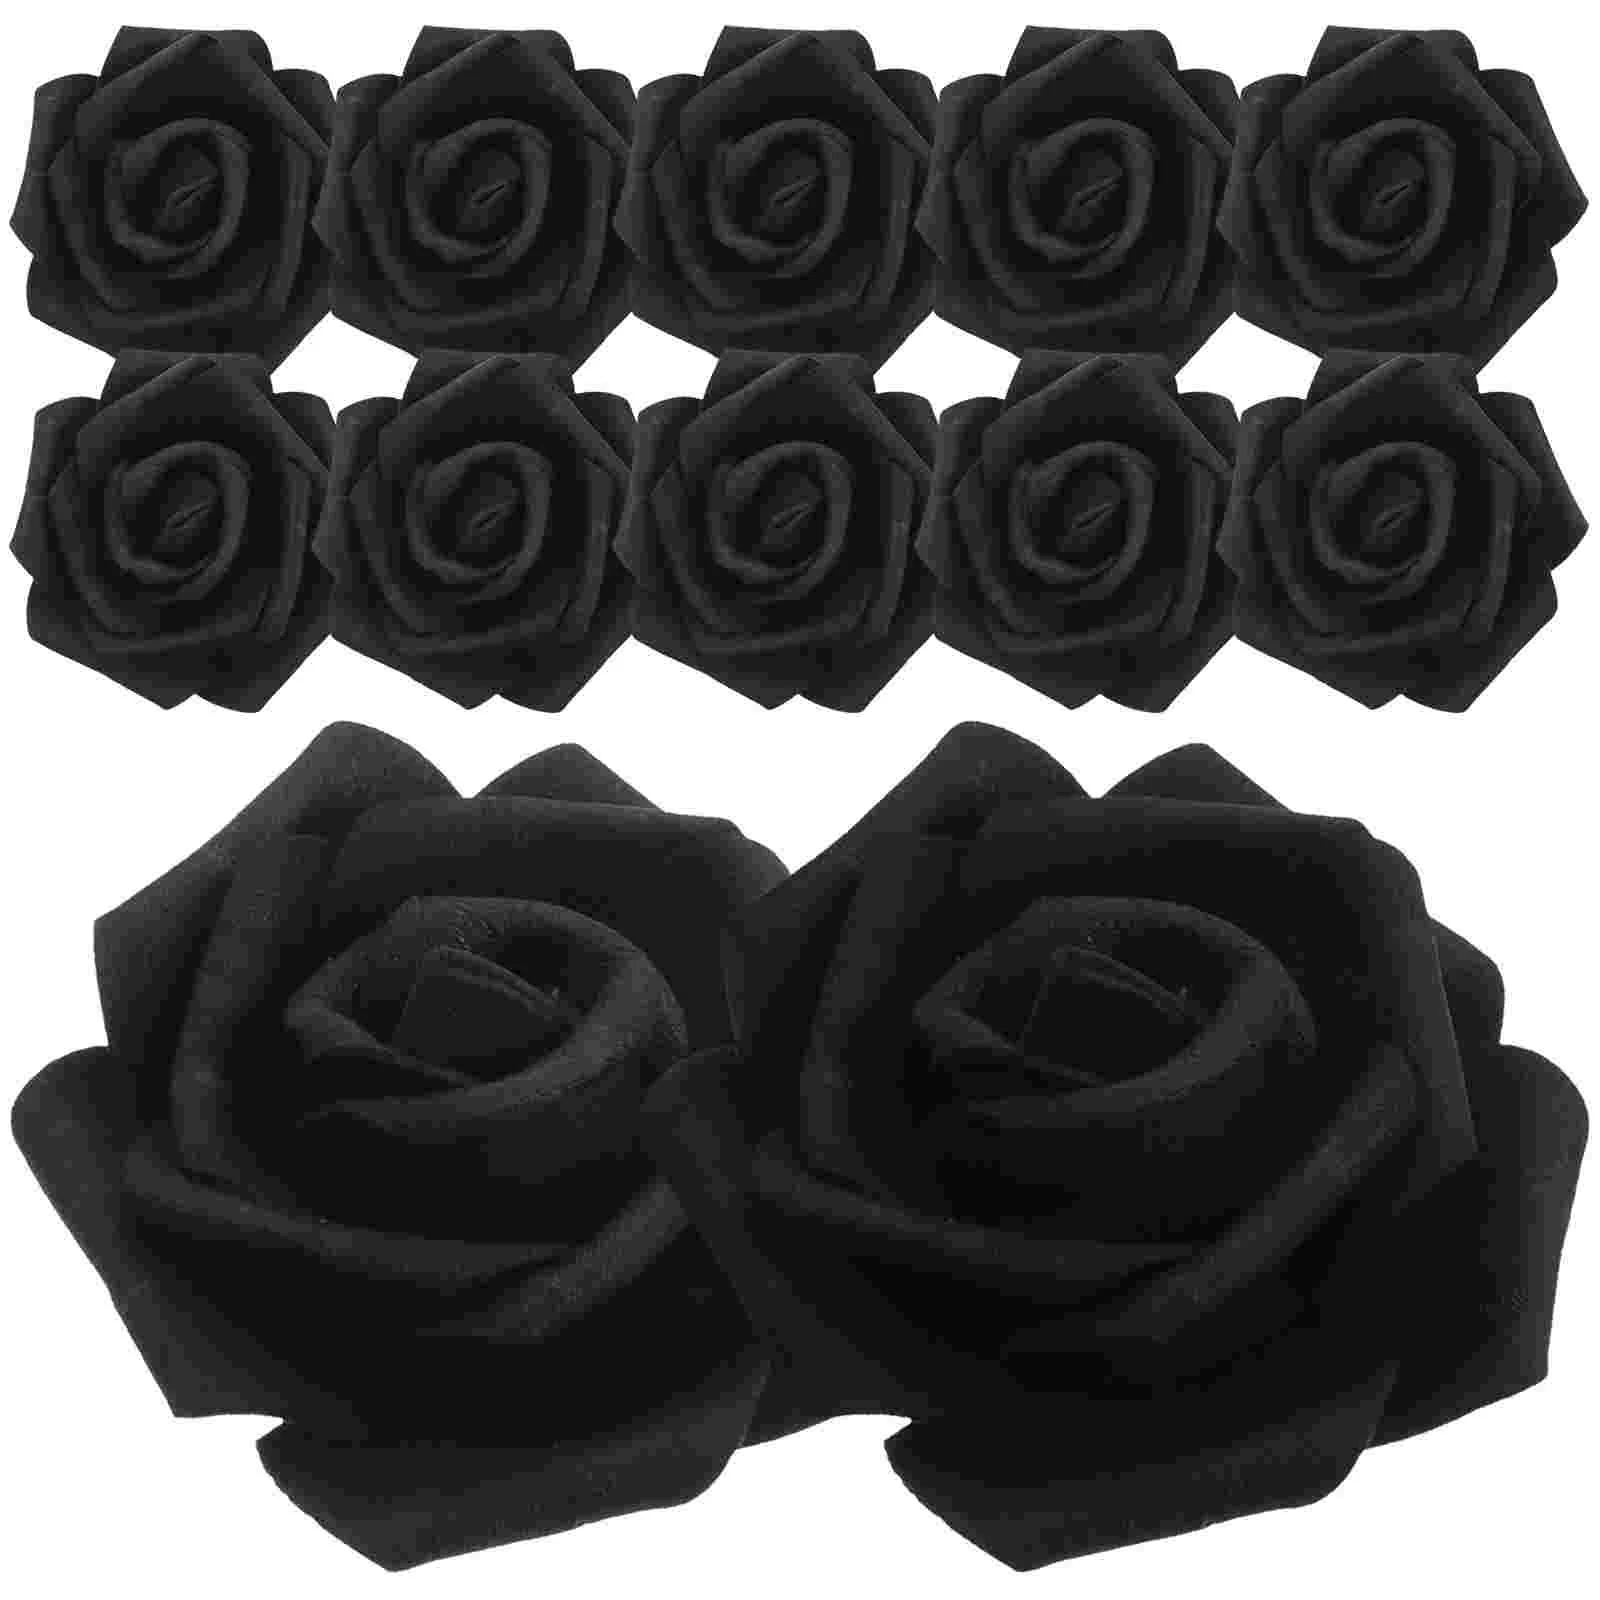 

Artificial Rose Faux Flower Crafts Fake Head Flowers Heads Decor Black Roses Bulk Bride Bouquet